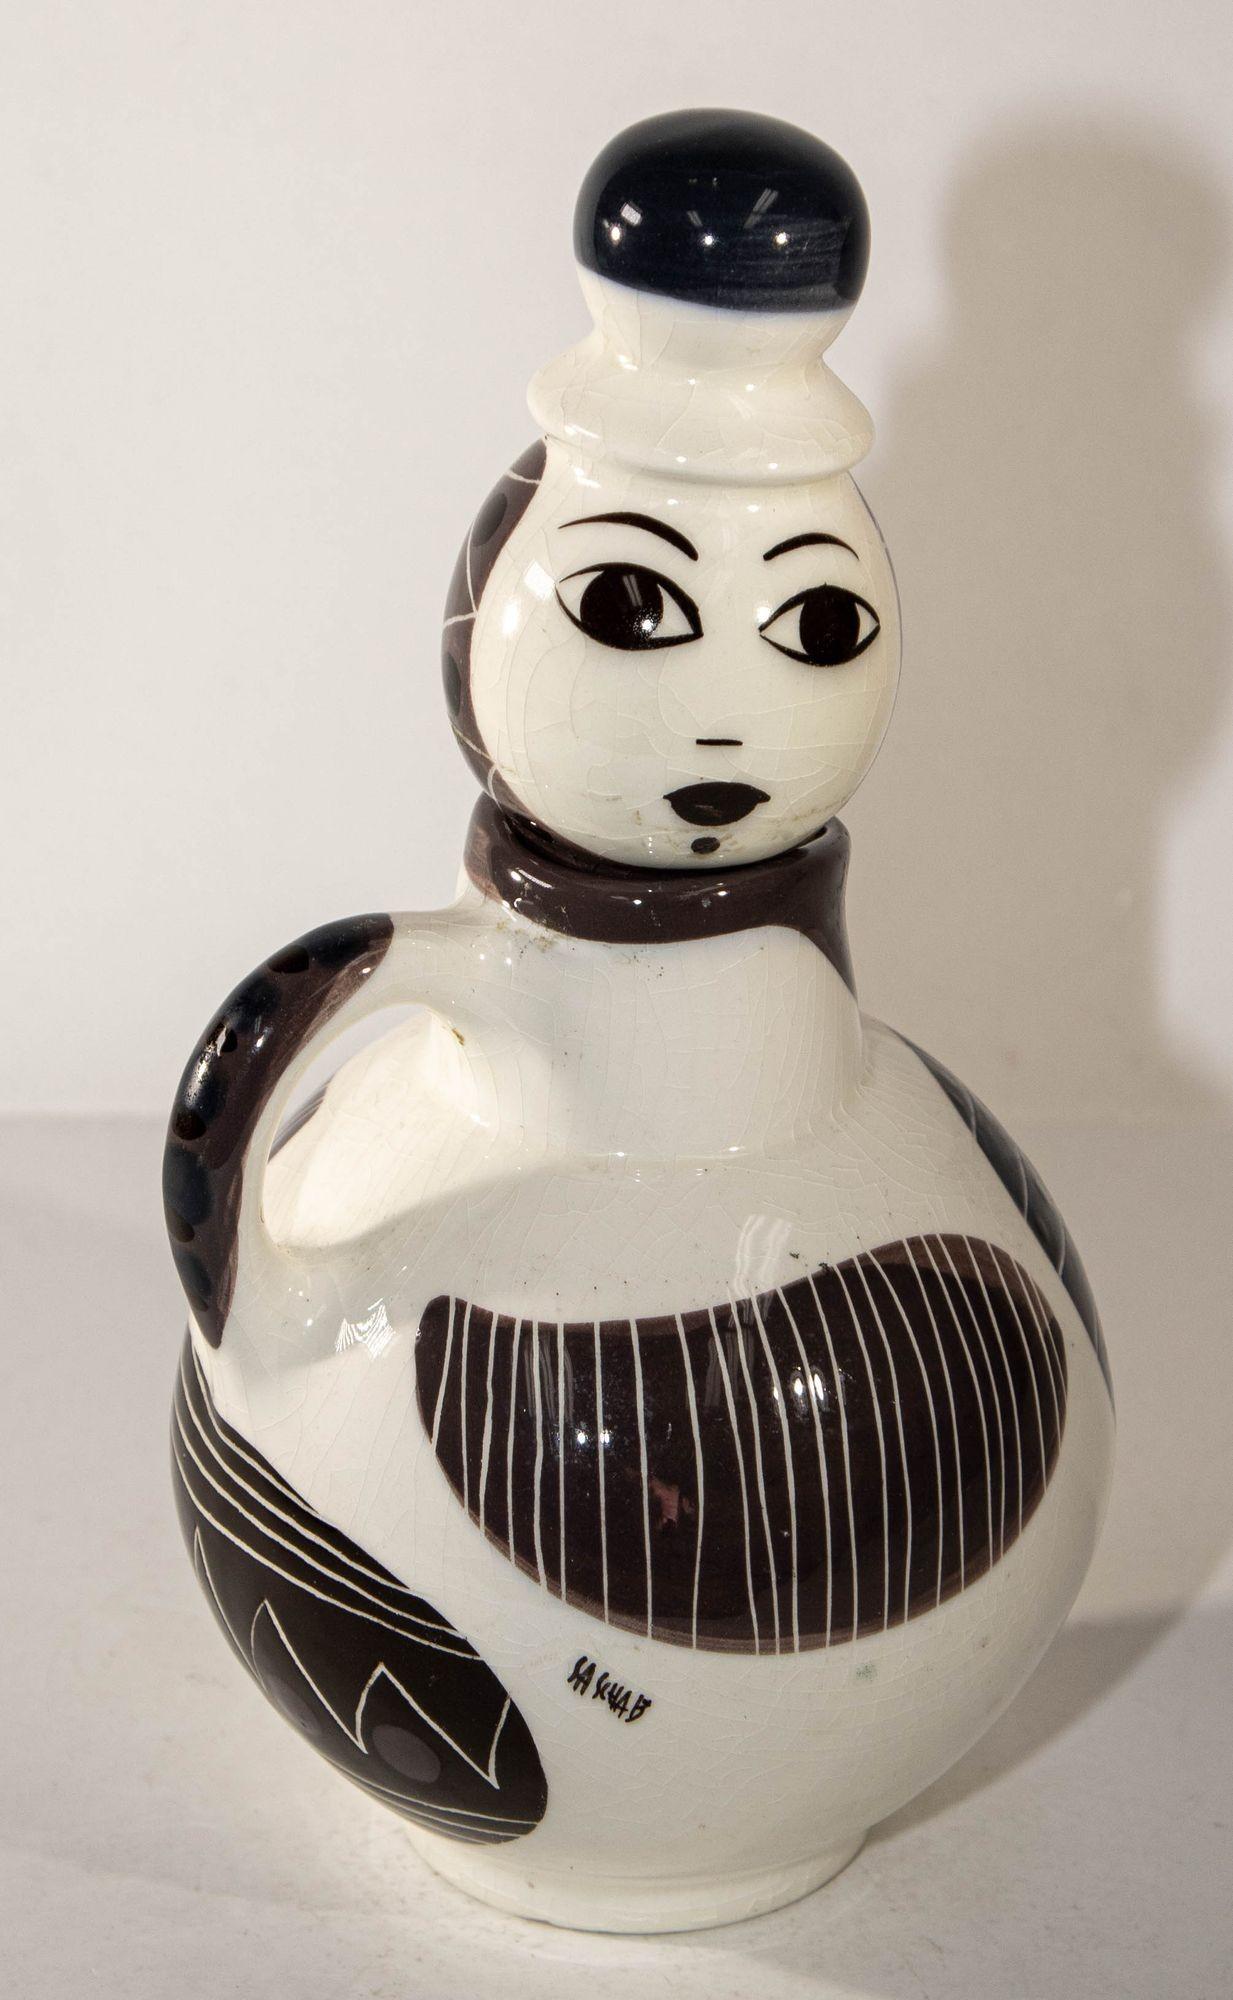 Sascha Brastoff Art Studio Ceramic midcentury Art Pottery Lady Pitcher, Circa 1950s.
Mid-Century Modern Sascha Bradstoff Ceramic Lady Pitcher or Ewer.
Sascha Brastoff unusual black and white ceramic pitcher of a lady whose head is the